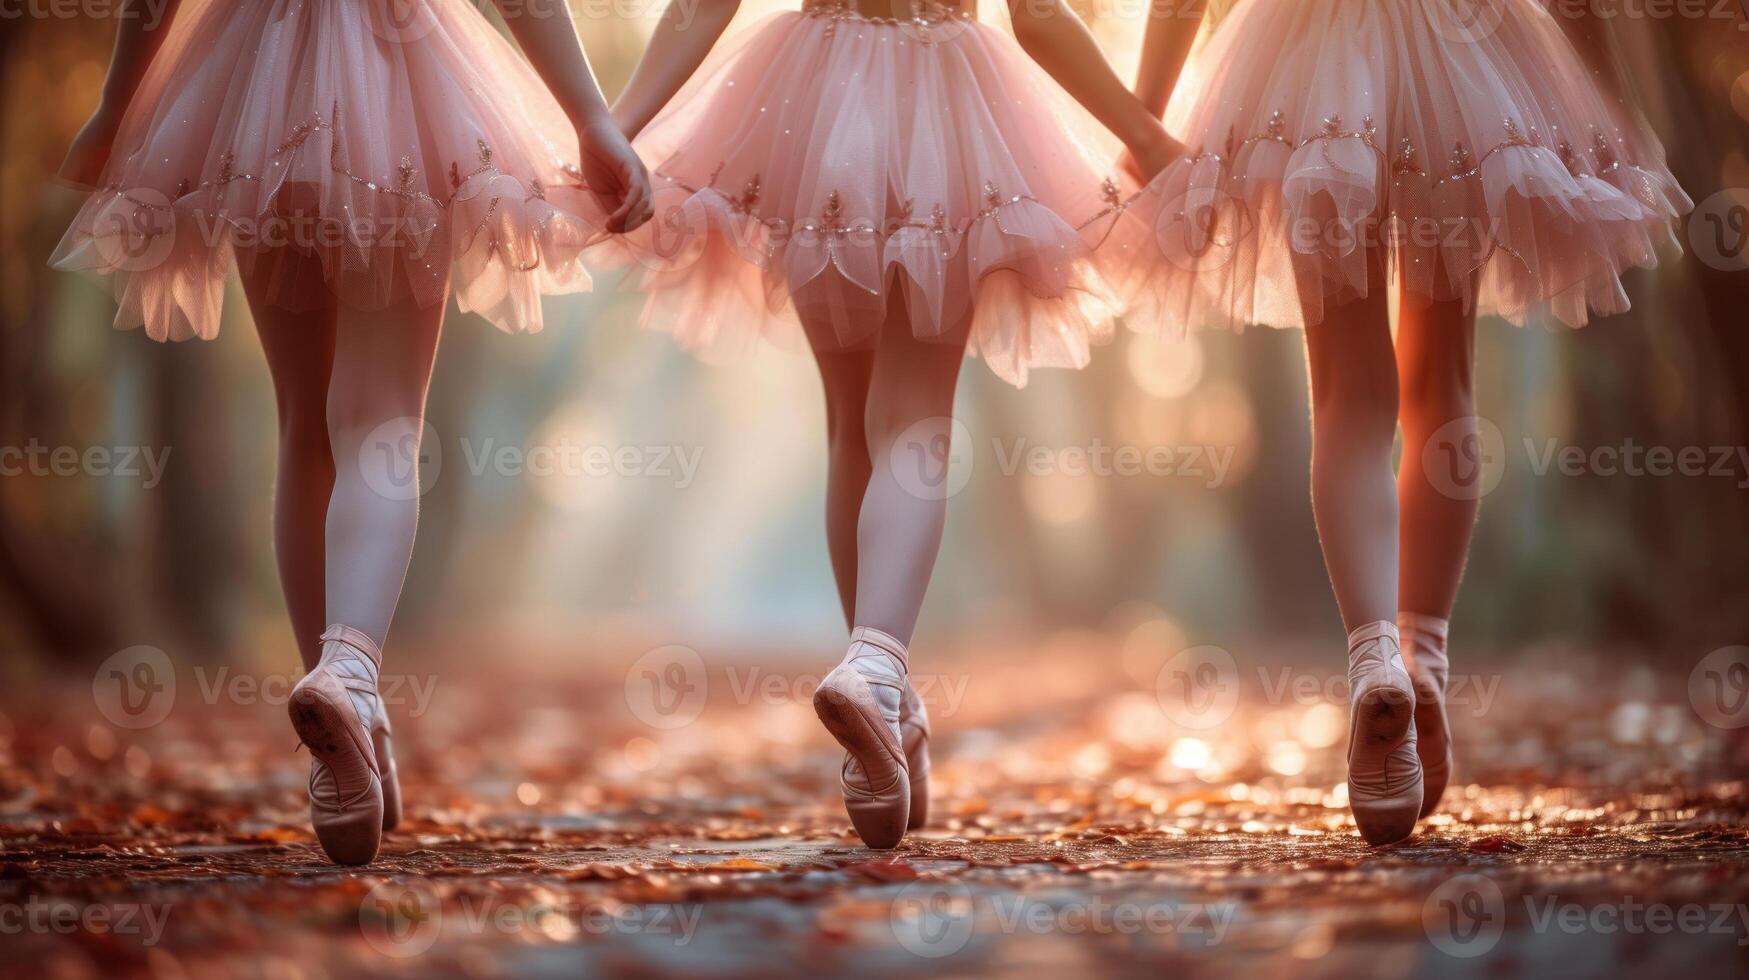 Young Ballerinas Dancing Among Fallen Leaves. photo